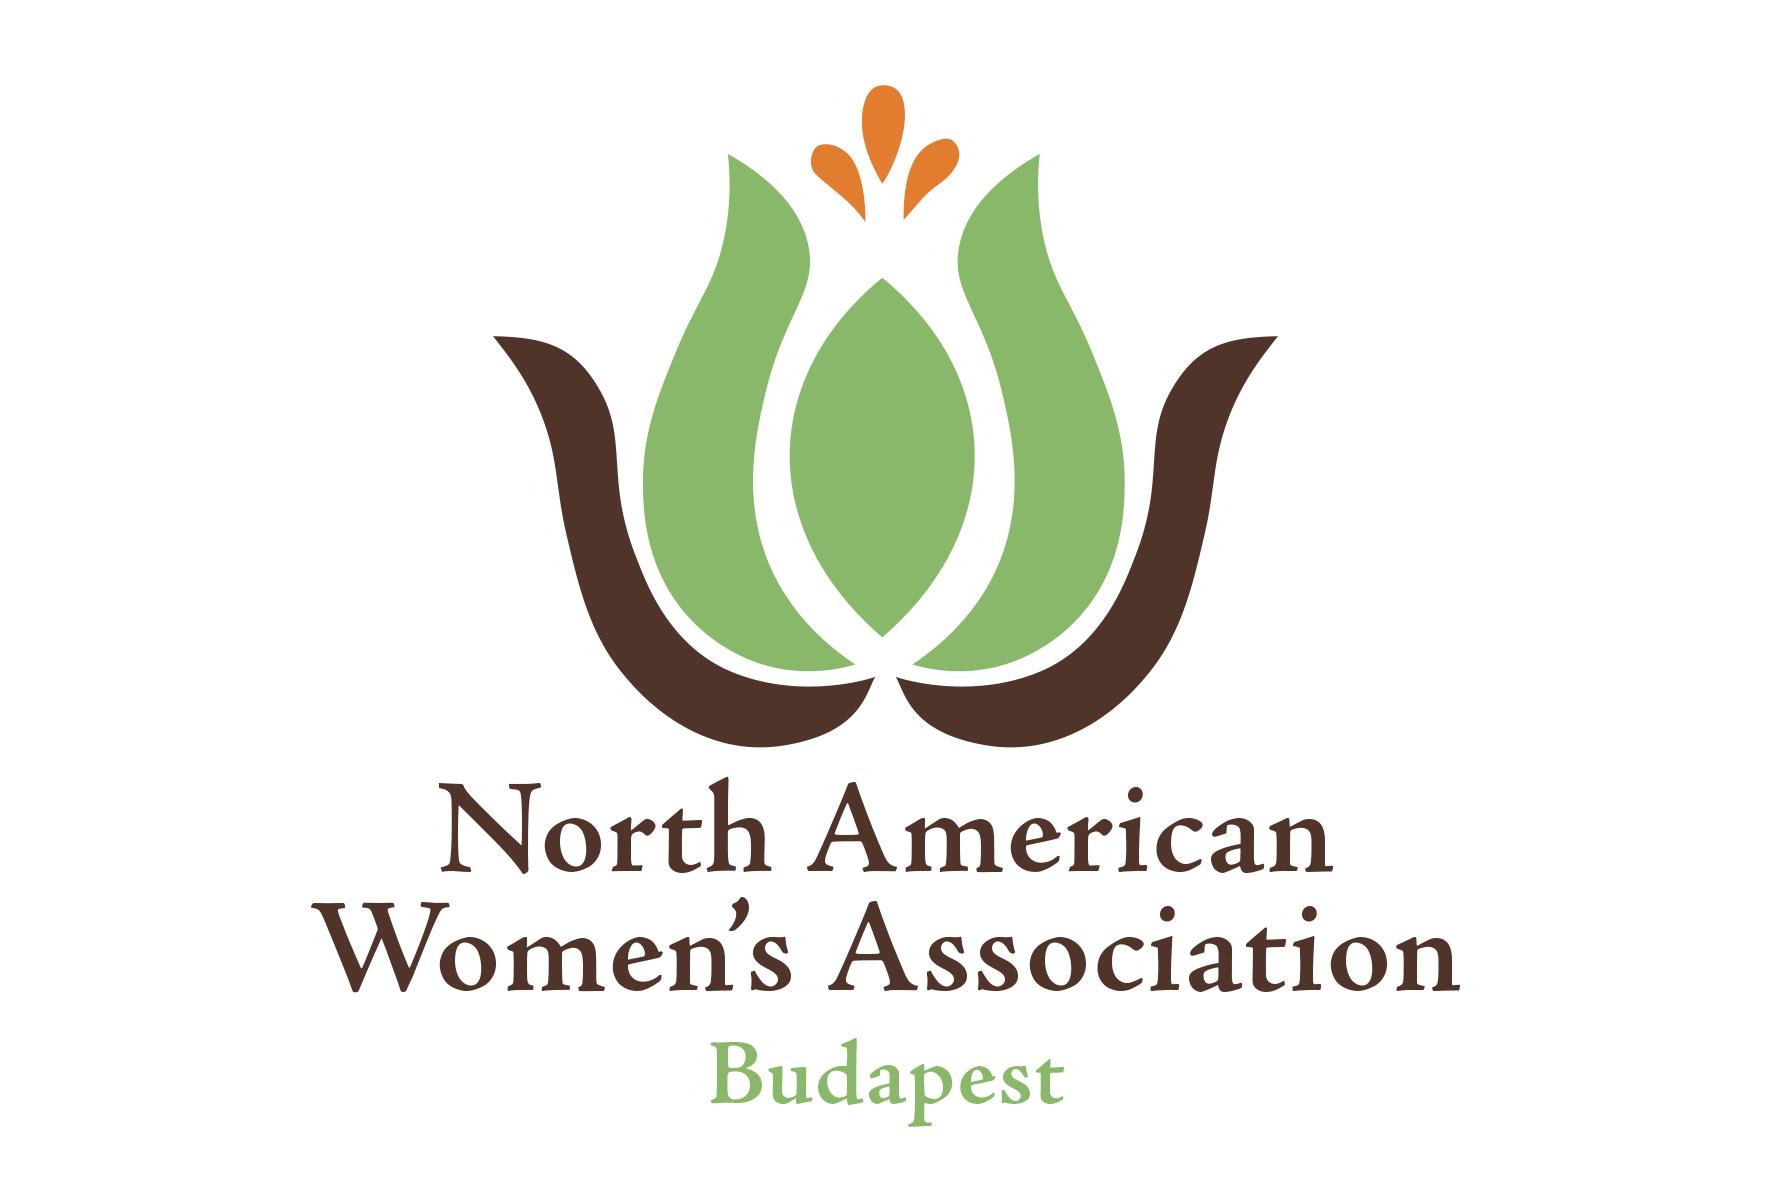 North American Women’s Association Budapest Event: Health & Wellness, 14 March